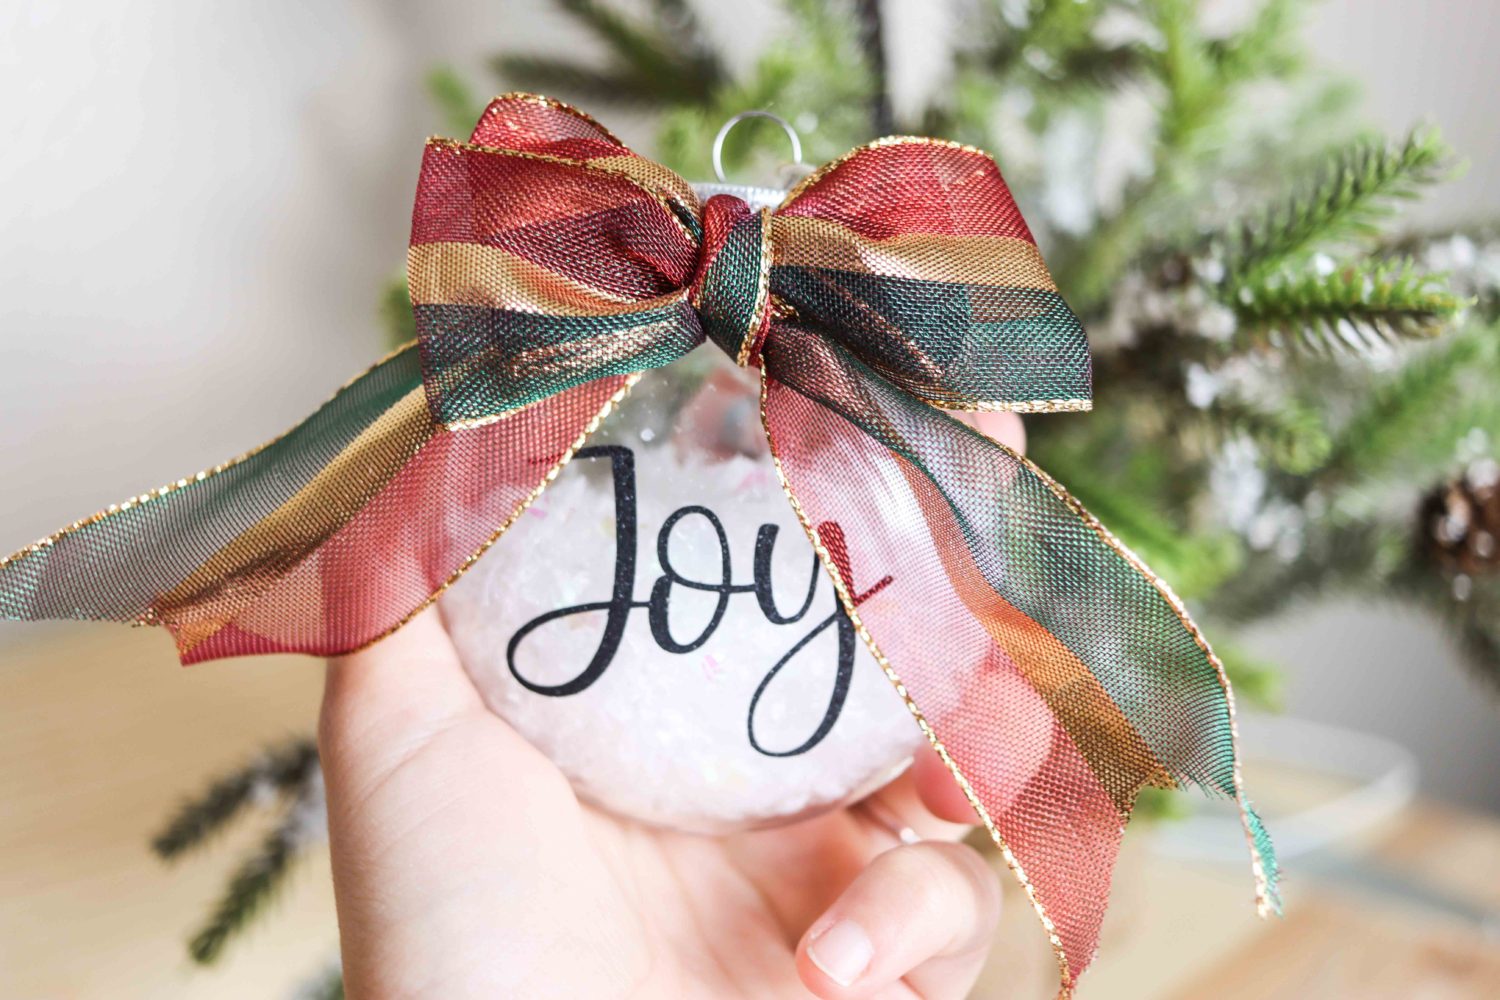 Joy Christmas ornament made with Cricut